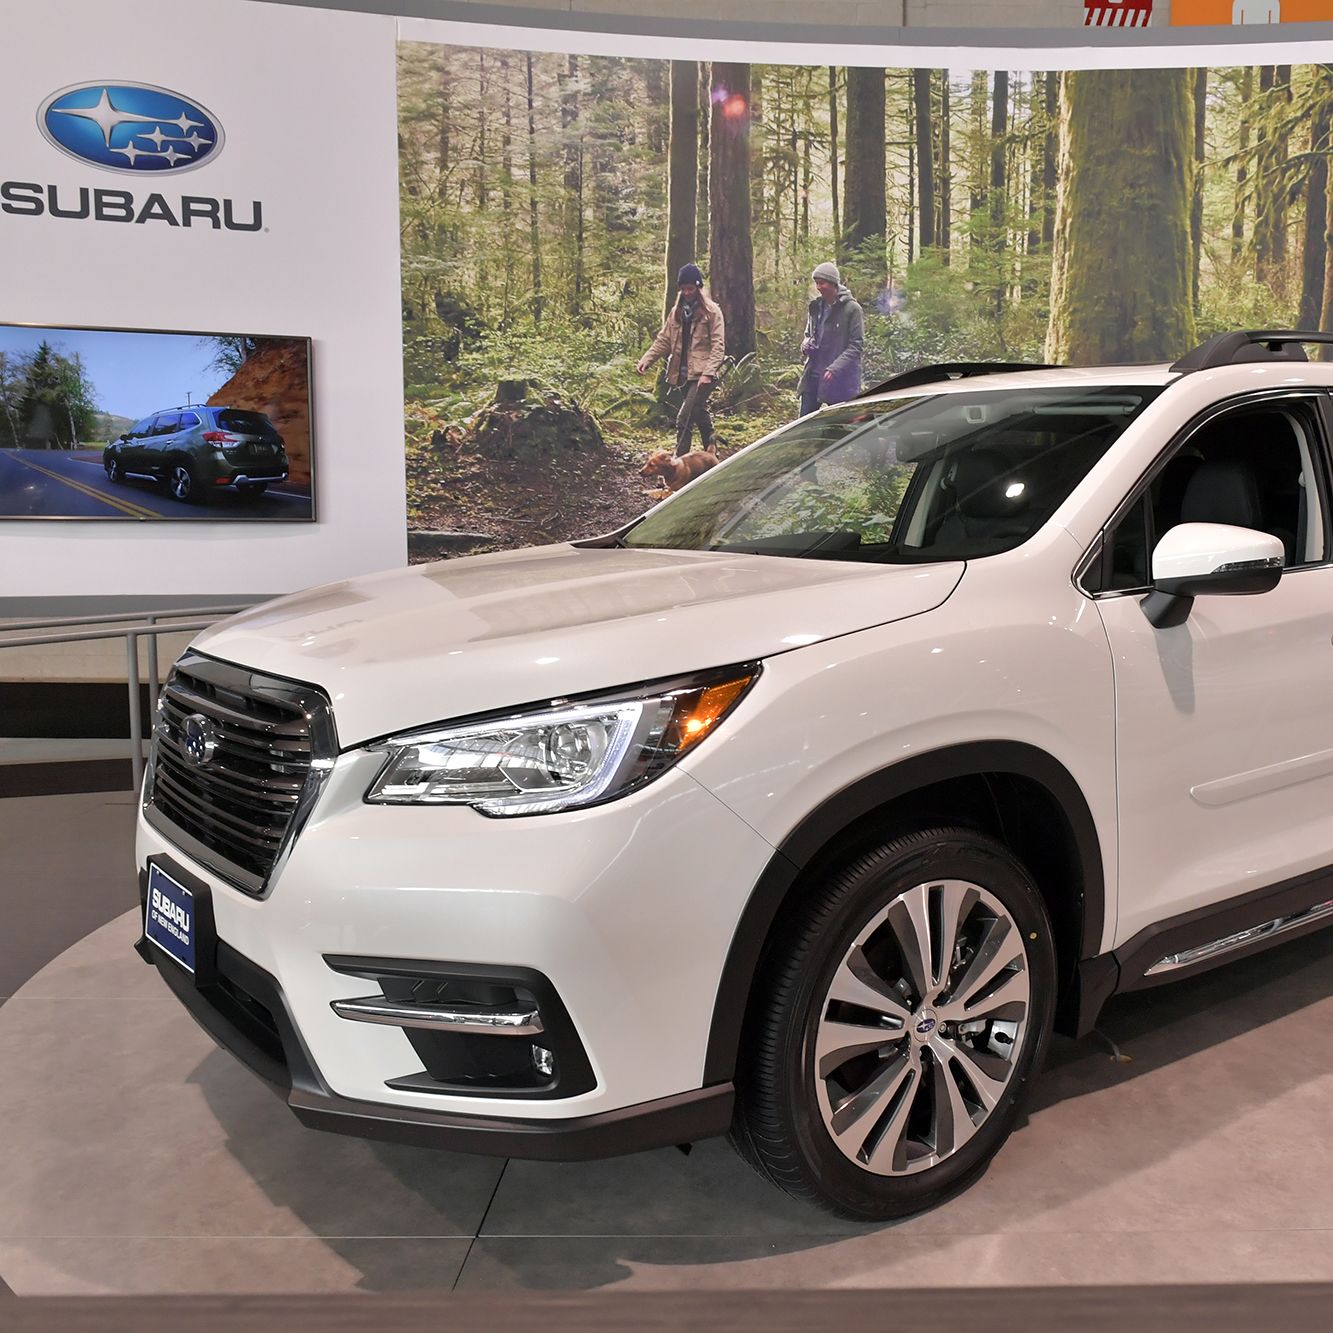 Subaru recalling Ascent SUVs | CNN Business